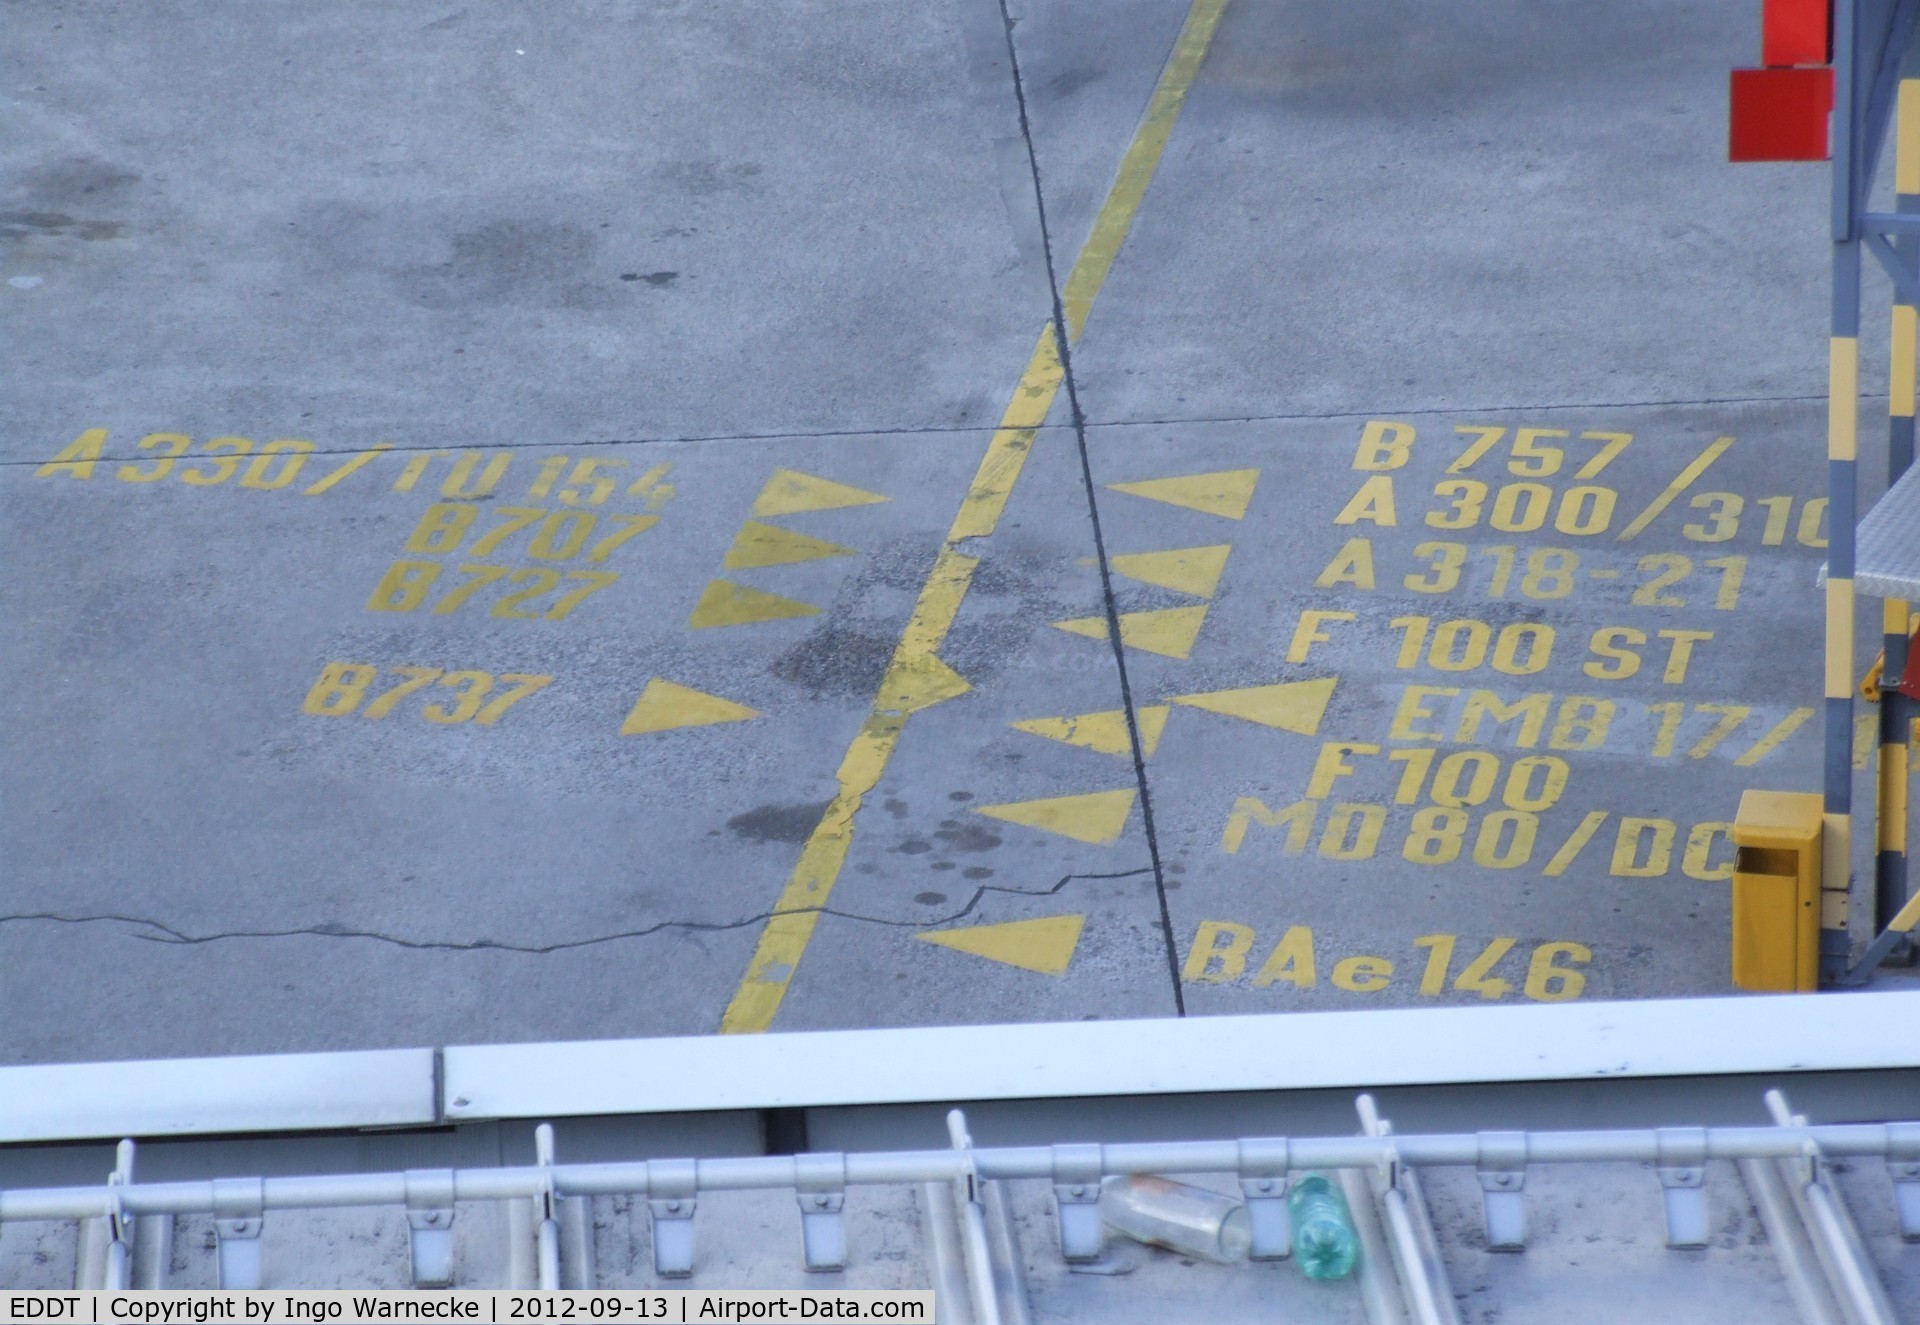 Tegel International Airport (closing in 2011), Berlin Germany (EDDT) - parking markings at a boarding bridge at Berlin-Tegel